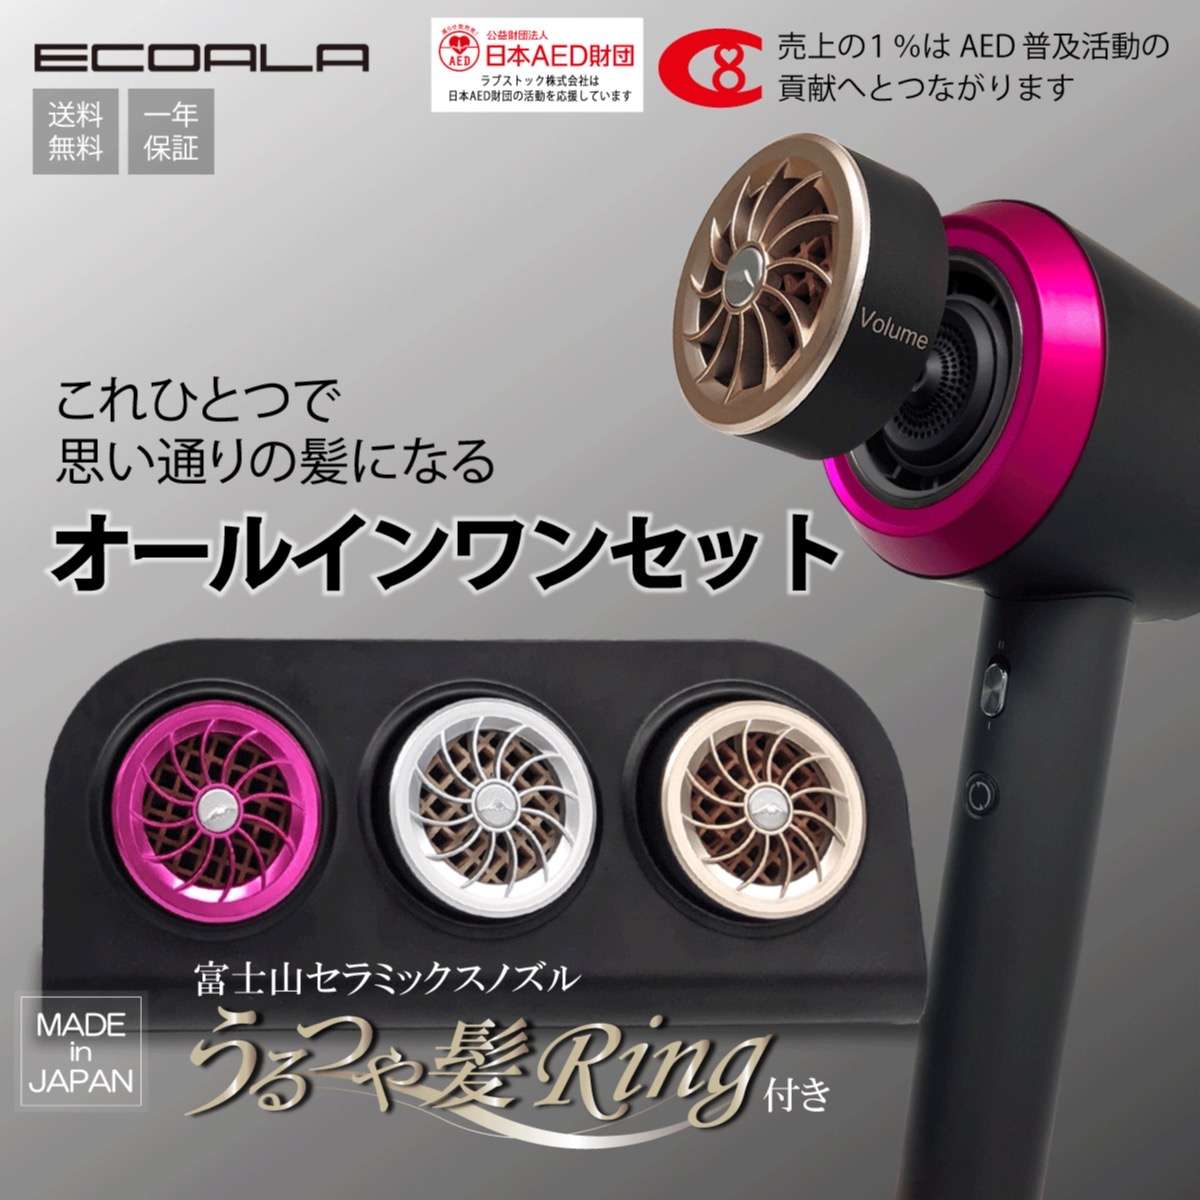 ECOARA Quick Hair Dryer もっとうるおう、 もっと美しく。 富士山溶岩セラミックス3種が 髪と地肌に合わせたヘアケアを実現。 オールインワンセットでスタイリングや気分に合わせて 髪・自由自在。　神戸(元町・住吉・兵庫)のヘアサロン　美容室スマイル情報